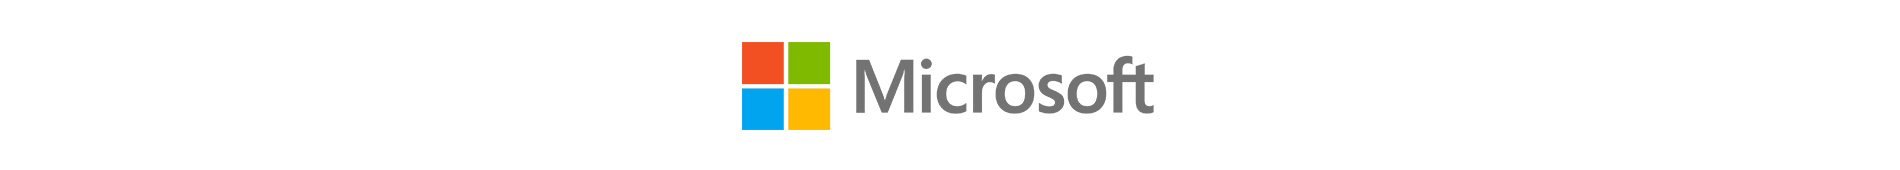 Microsoft Store Btm Banner